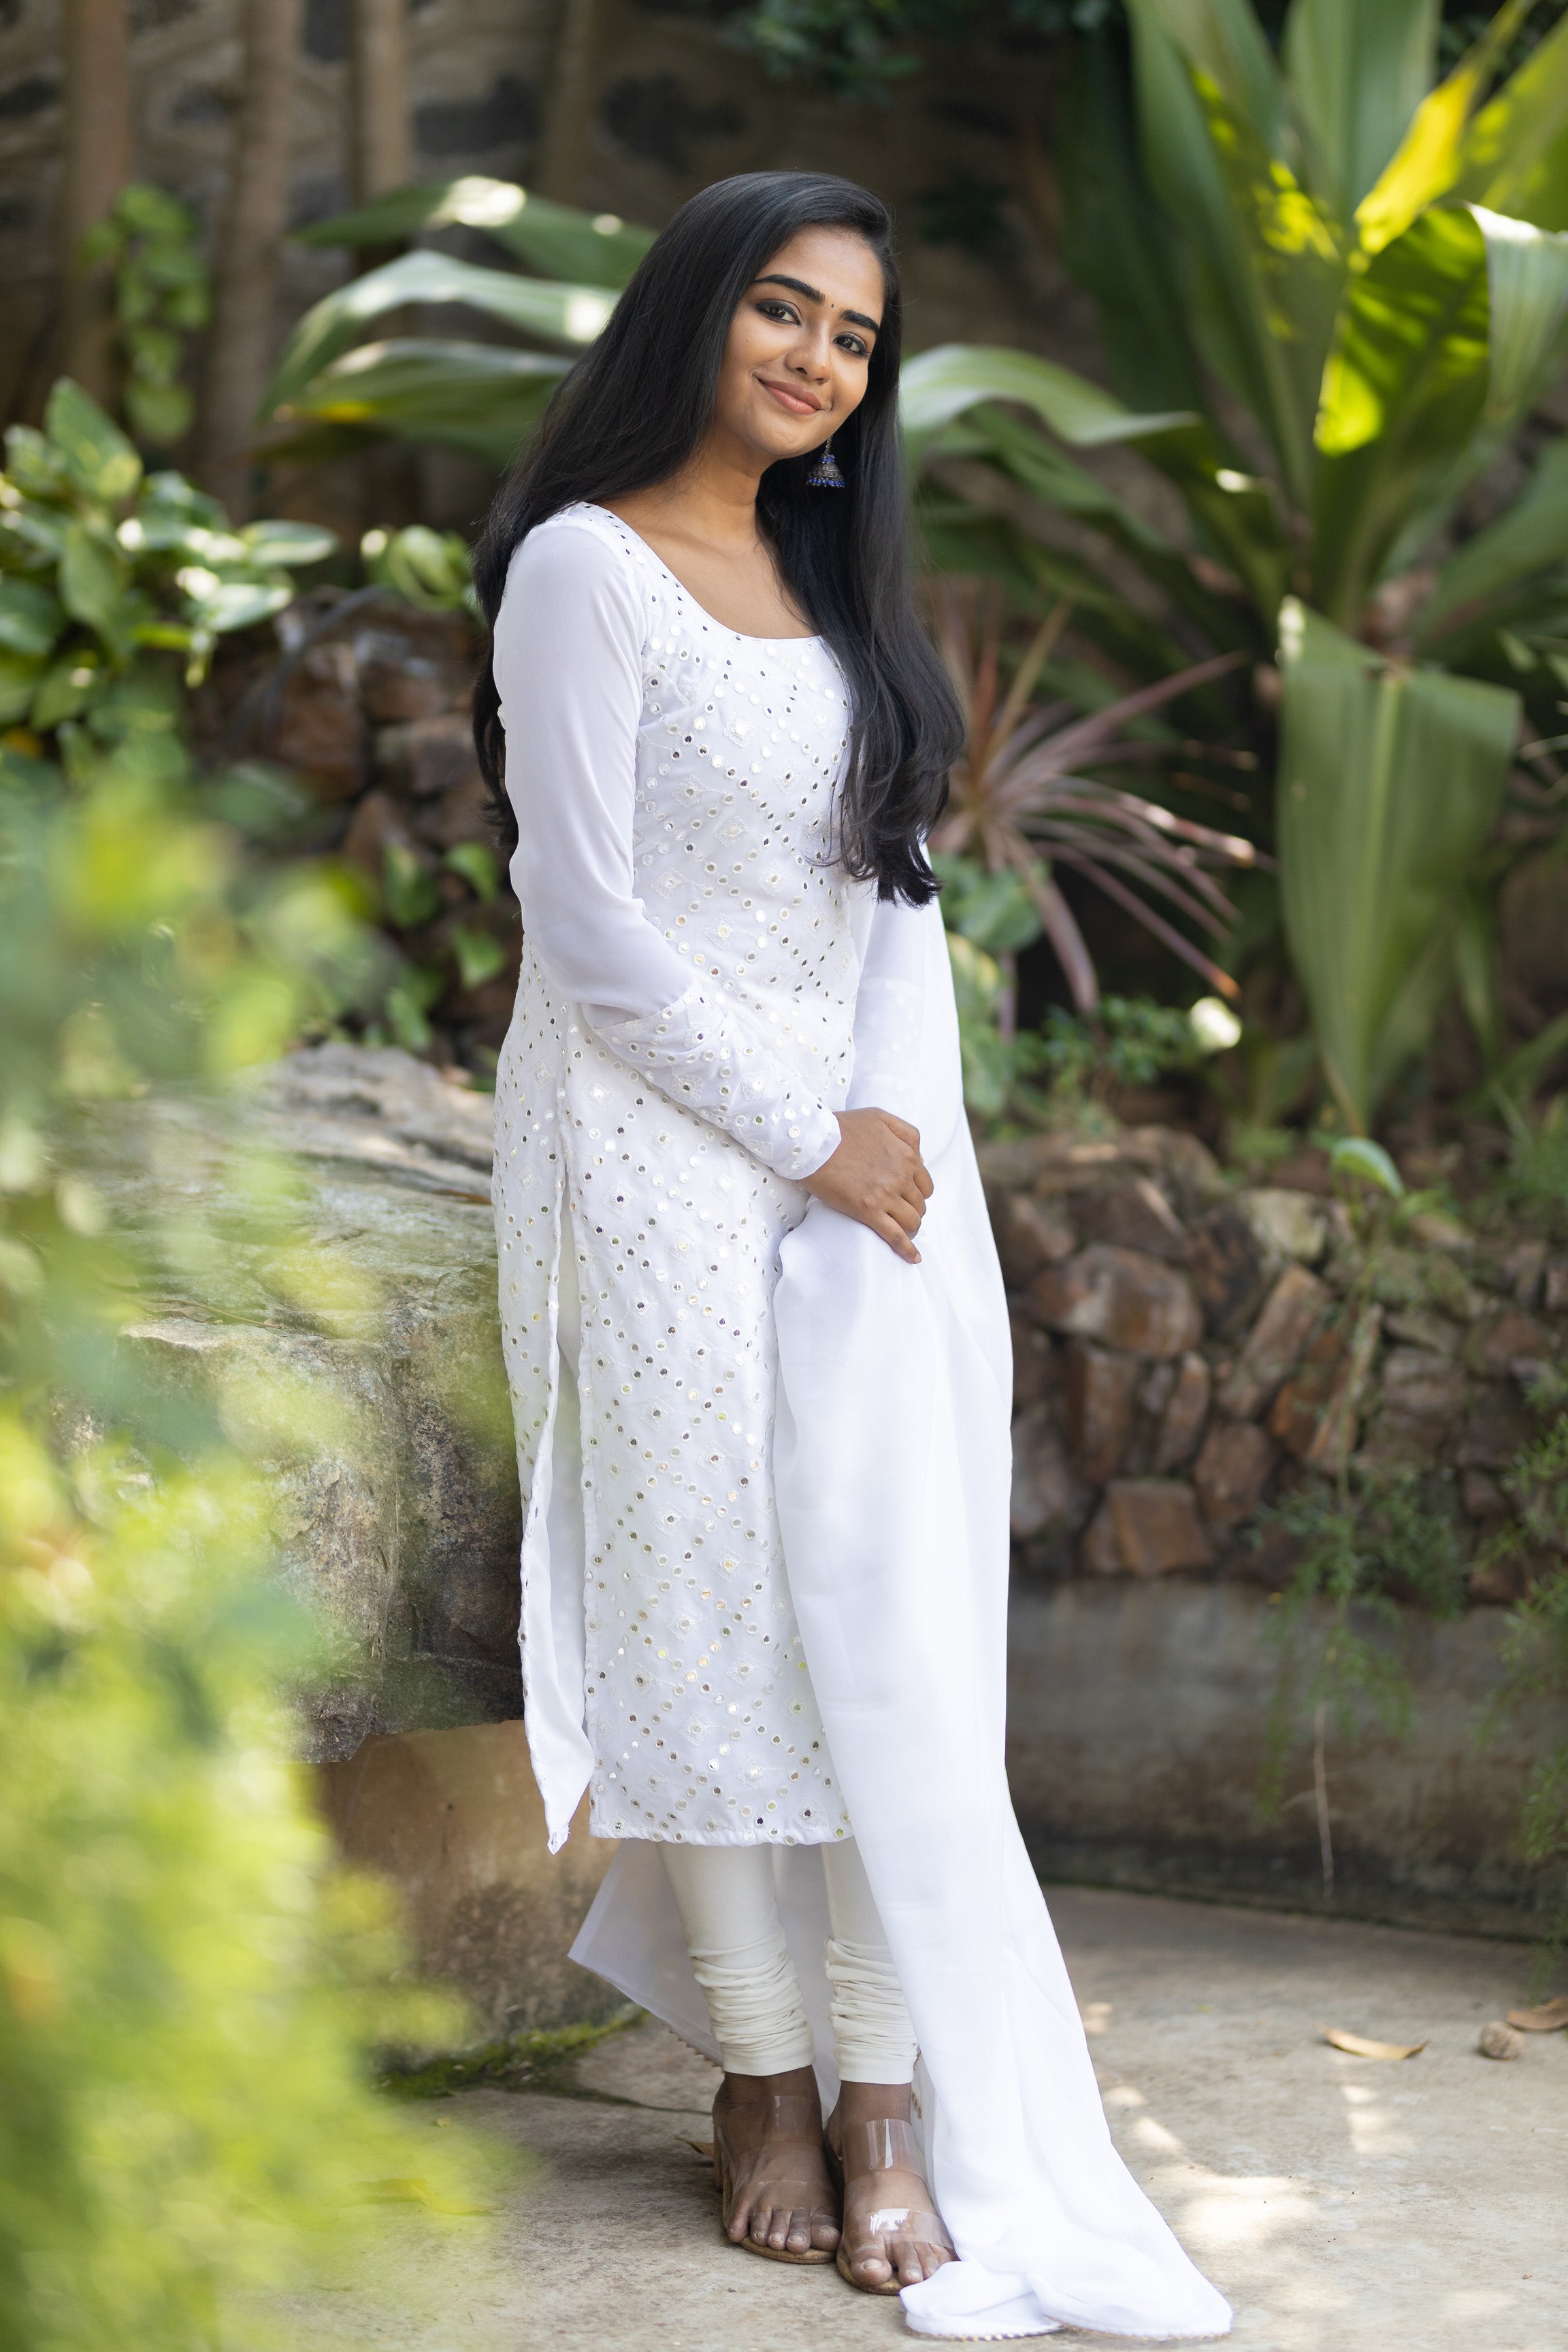 Bollywood Africa - #Sonakshi #Sinha looking #beautiful in #white #dress # kurti #lehenga . . #actor #actress #beauty #stylediary #stylegoals  #stylefashion #fashion #fashionblogger #fashionista #fashionable  #fashionstyle #fashionsketch #fashionaddicted ...